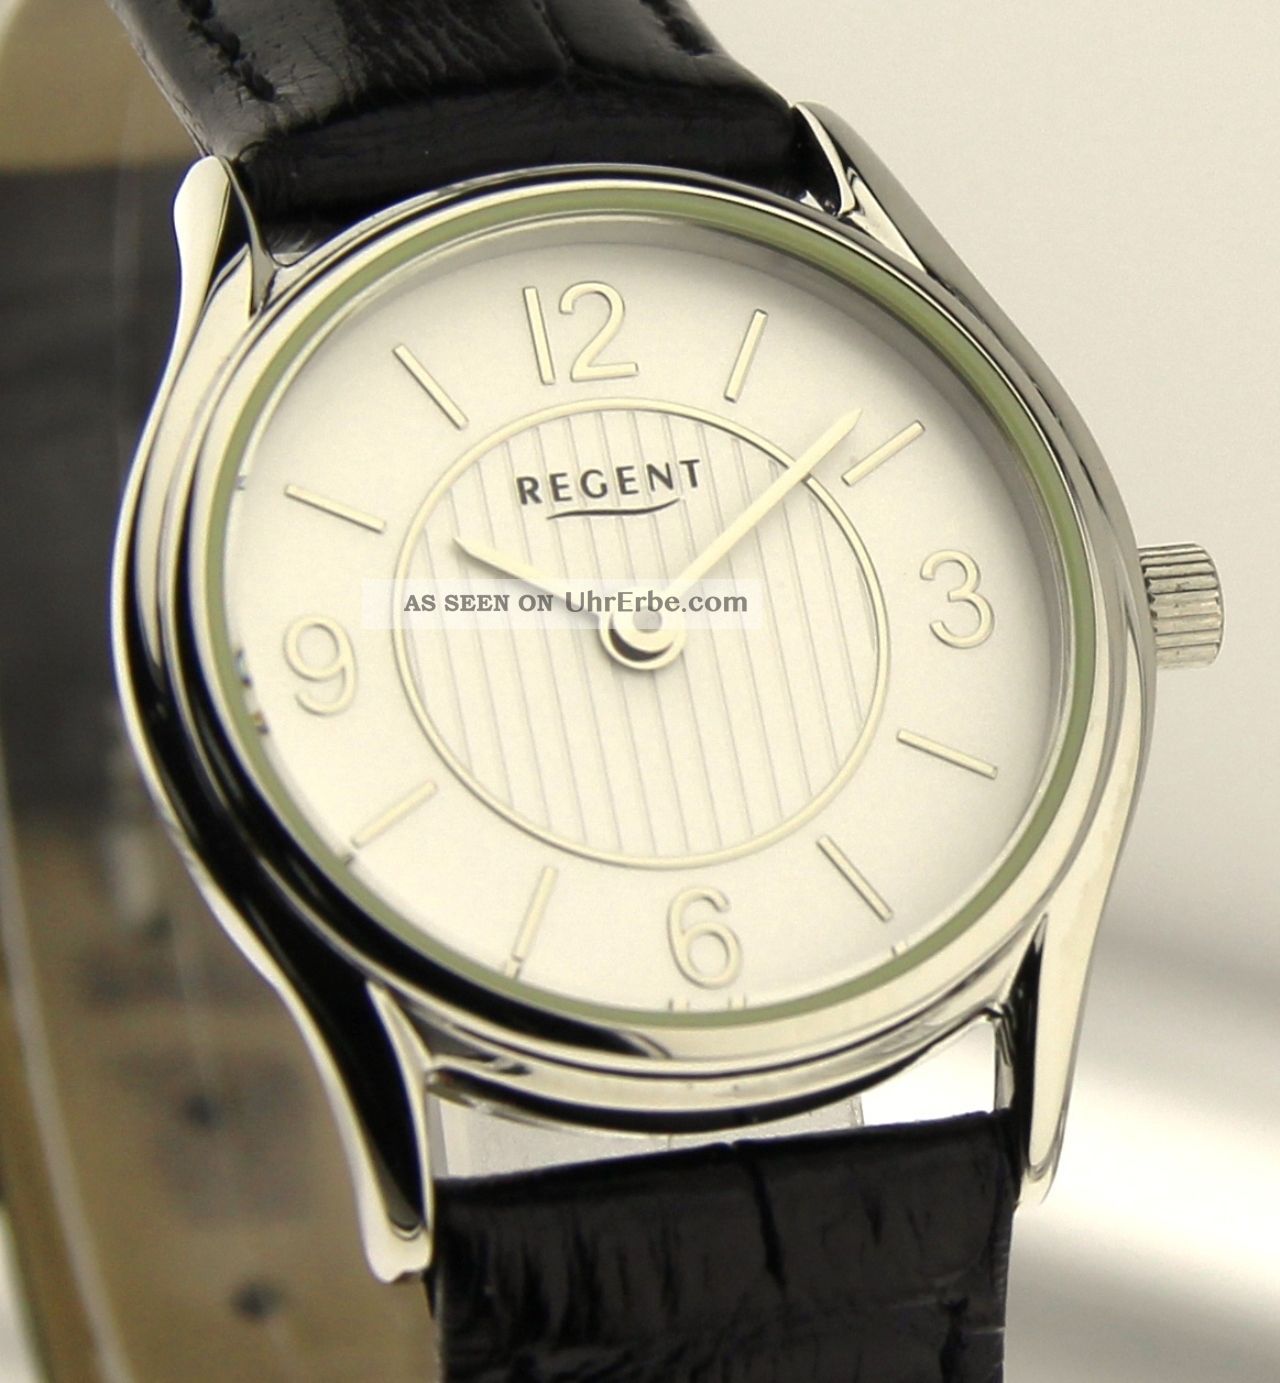 Armbanduhr Regent - Mineralglas - Mit Lederband Armbanduhren Bild